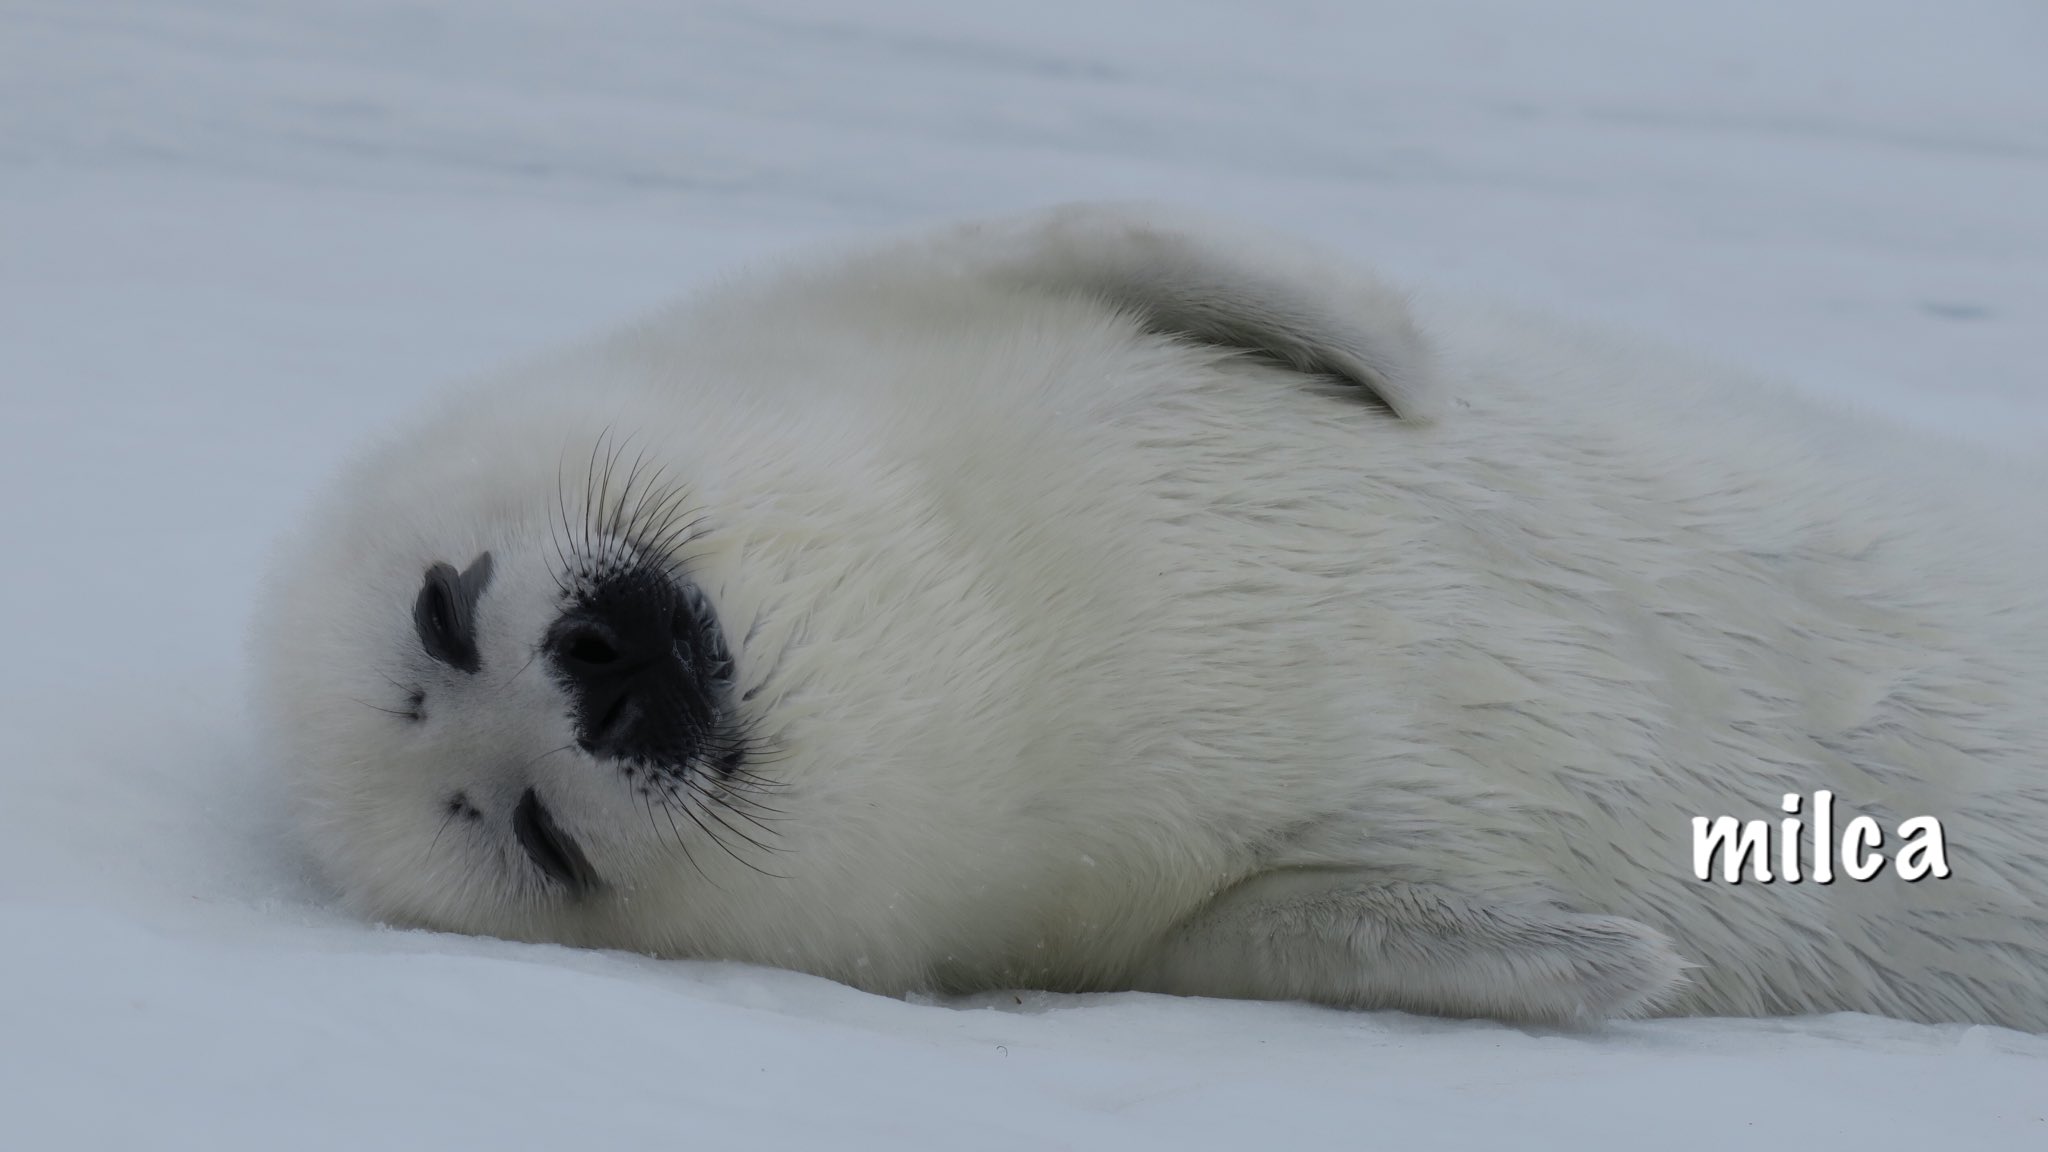 Milca アザラシの赤ちゃんは表情豊か どんな格好しても可愛い このもふもふの白い毛は生後2週間だけです 3 4 18 カナダ ケベック州 マドレーヌ島 アザラシ タテゴトアザラシ Canada Madeleine Harpseal Seal T Co Th8s7vvywr